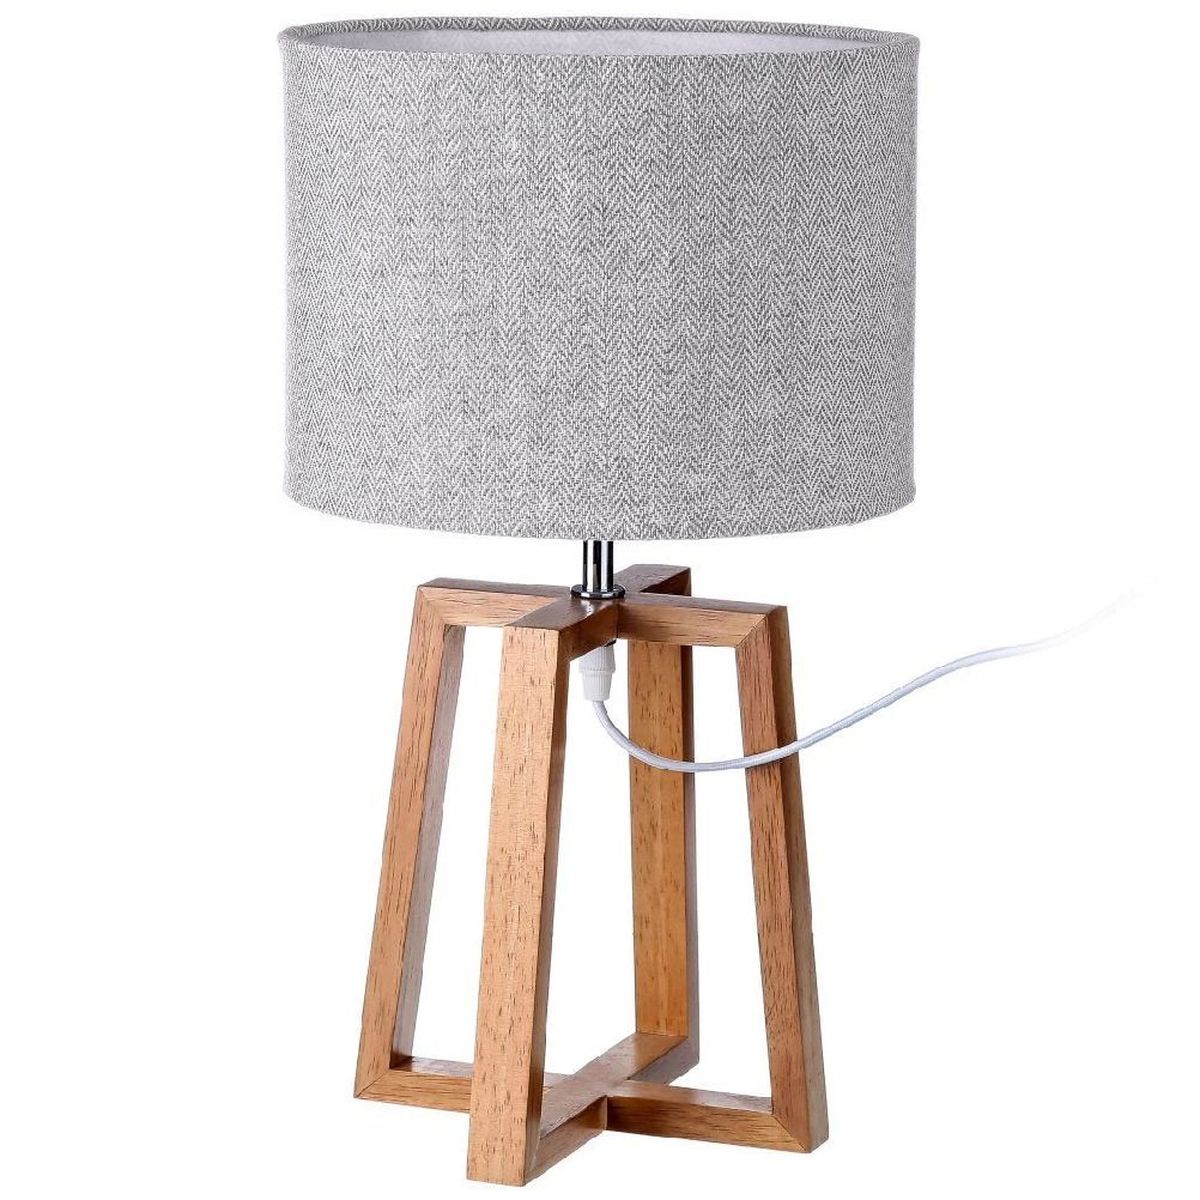 Lampe bois naturel et tweed gris Esprit Scandinave 44 cm